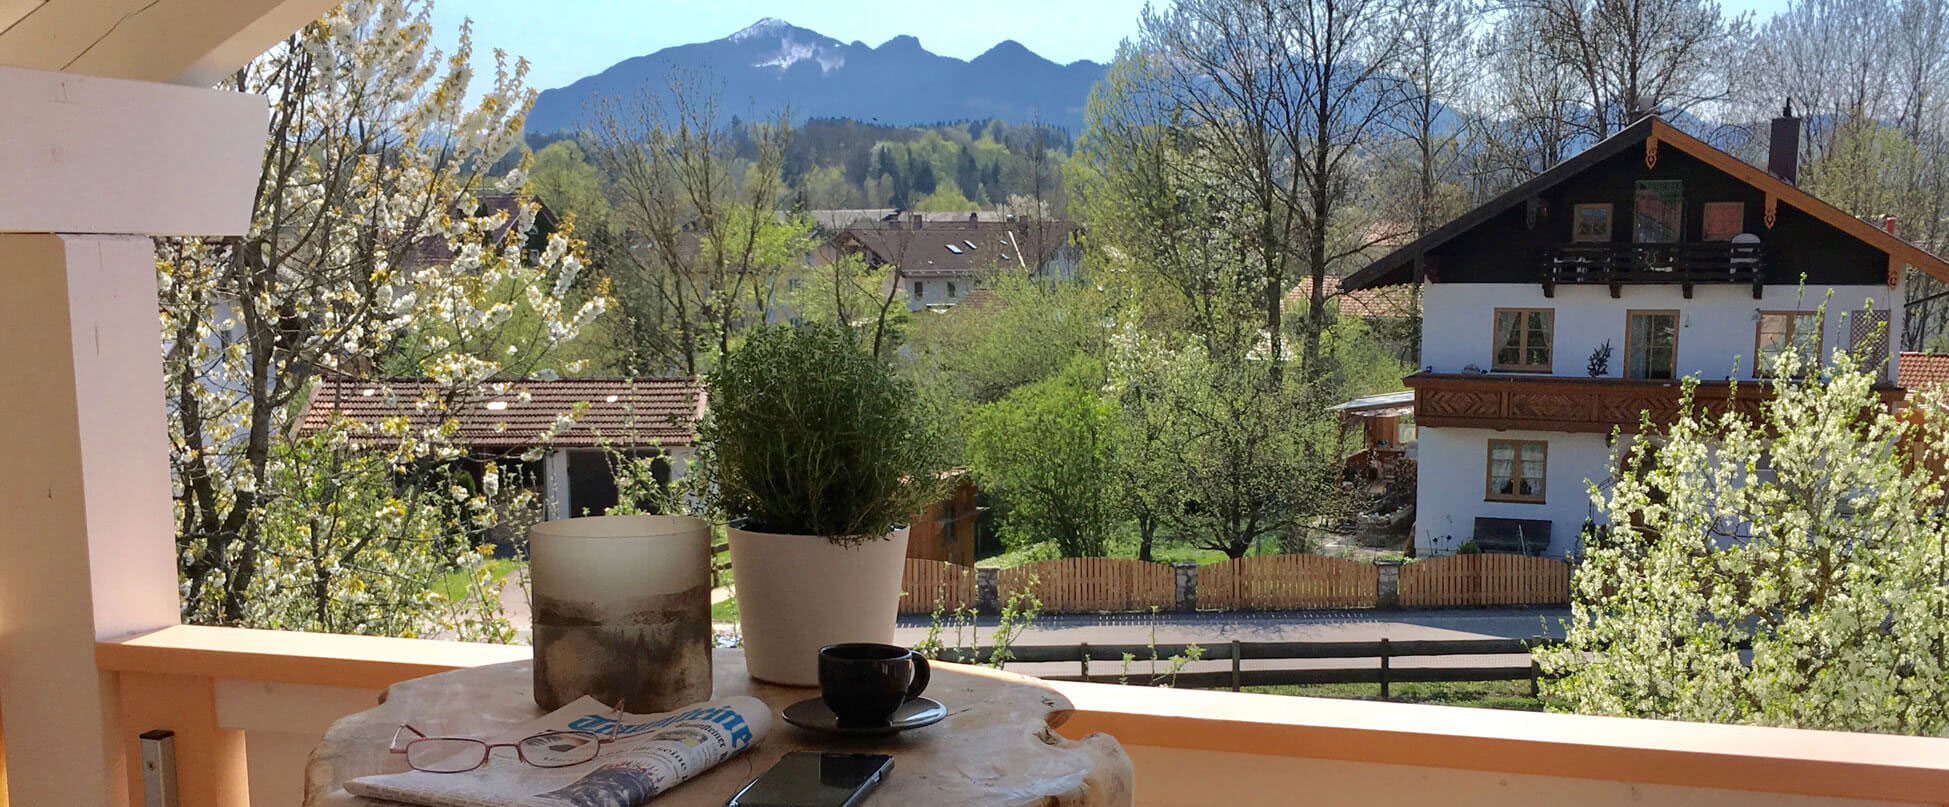 Shania Residence, Wellness- Ferienwohnung, Urlaubsunterkunft im Chiemgau.